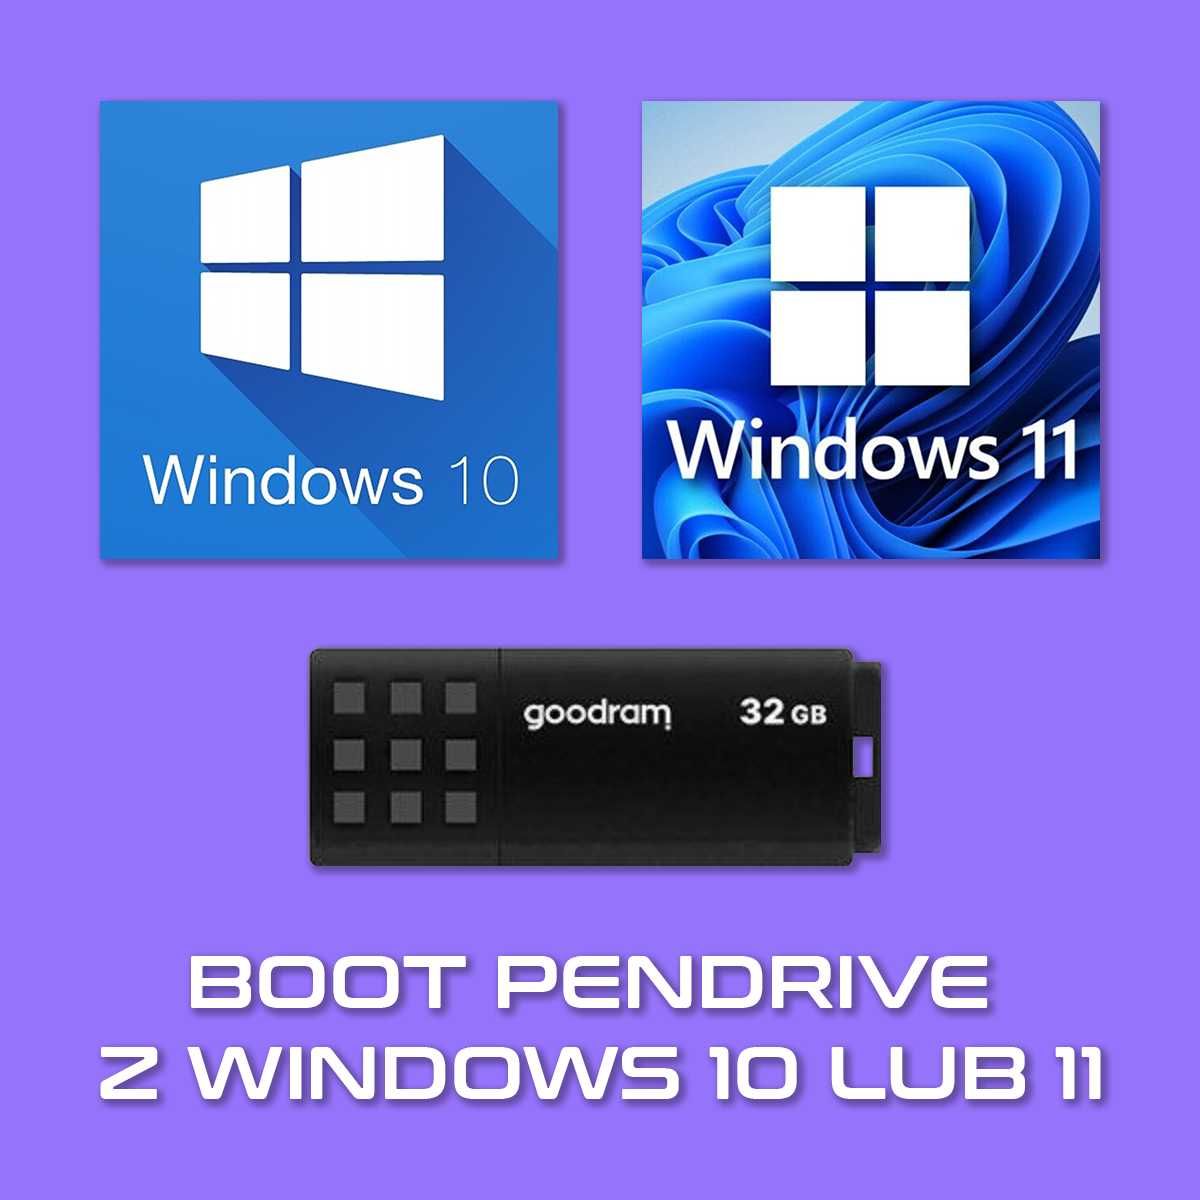 Bootowalny pendrive 32GB system Windows 10 lub 11